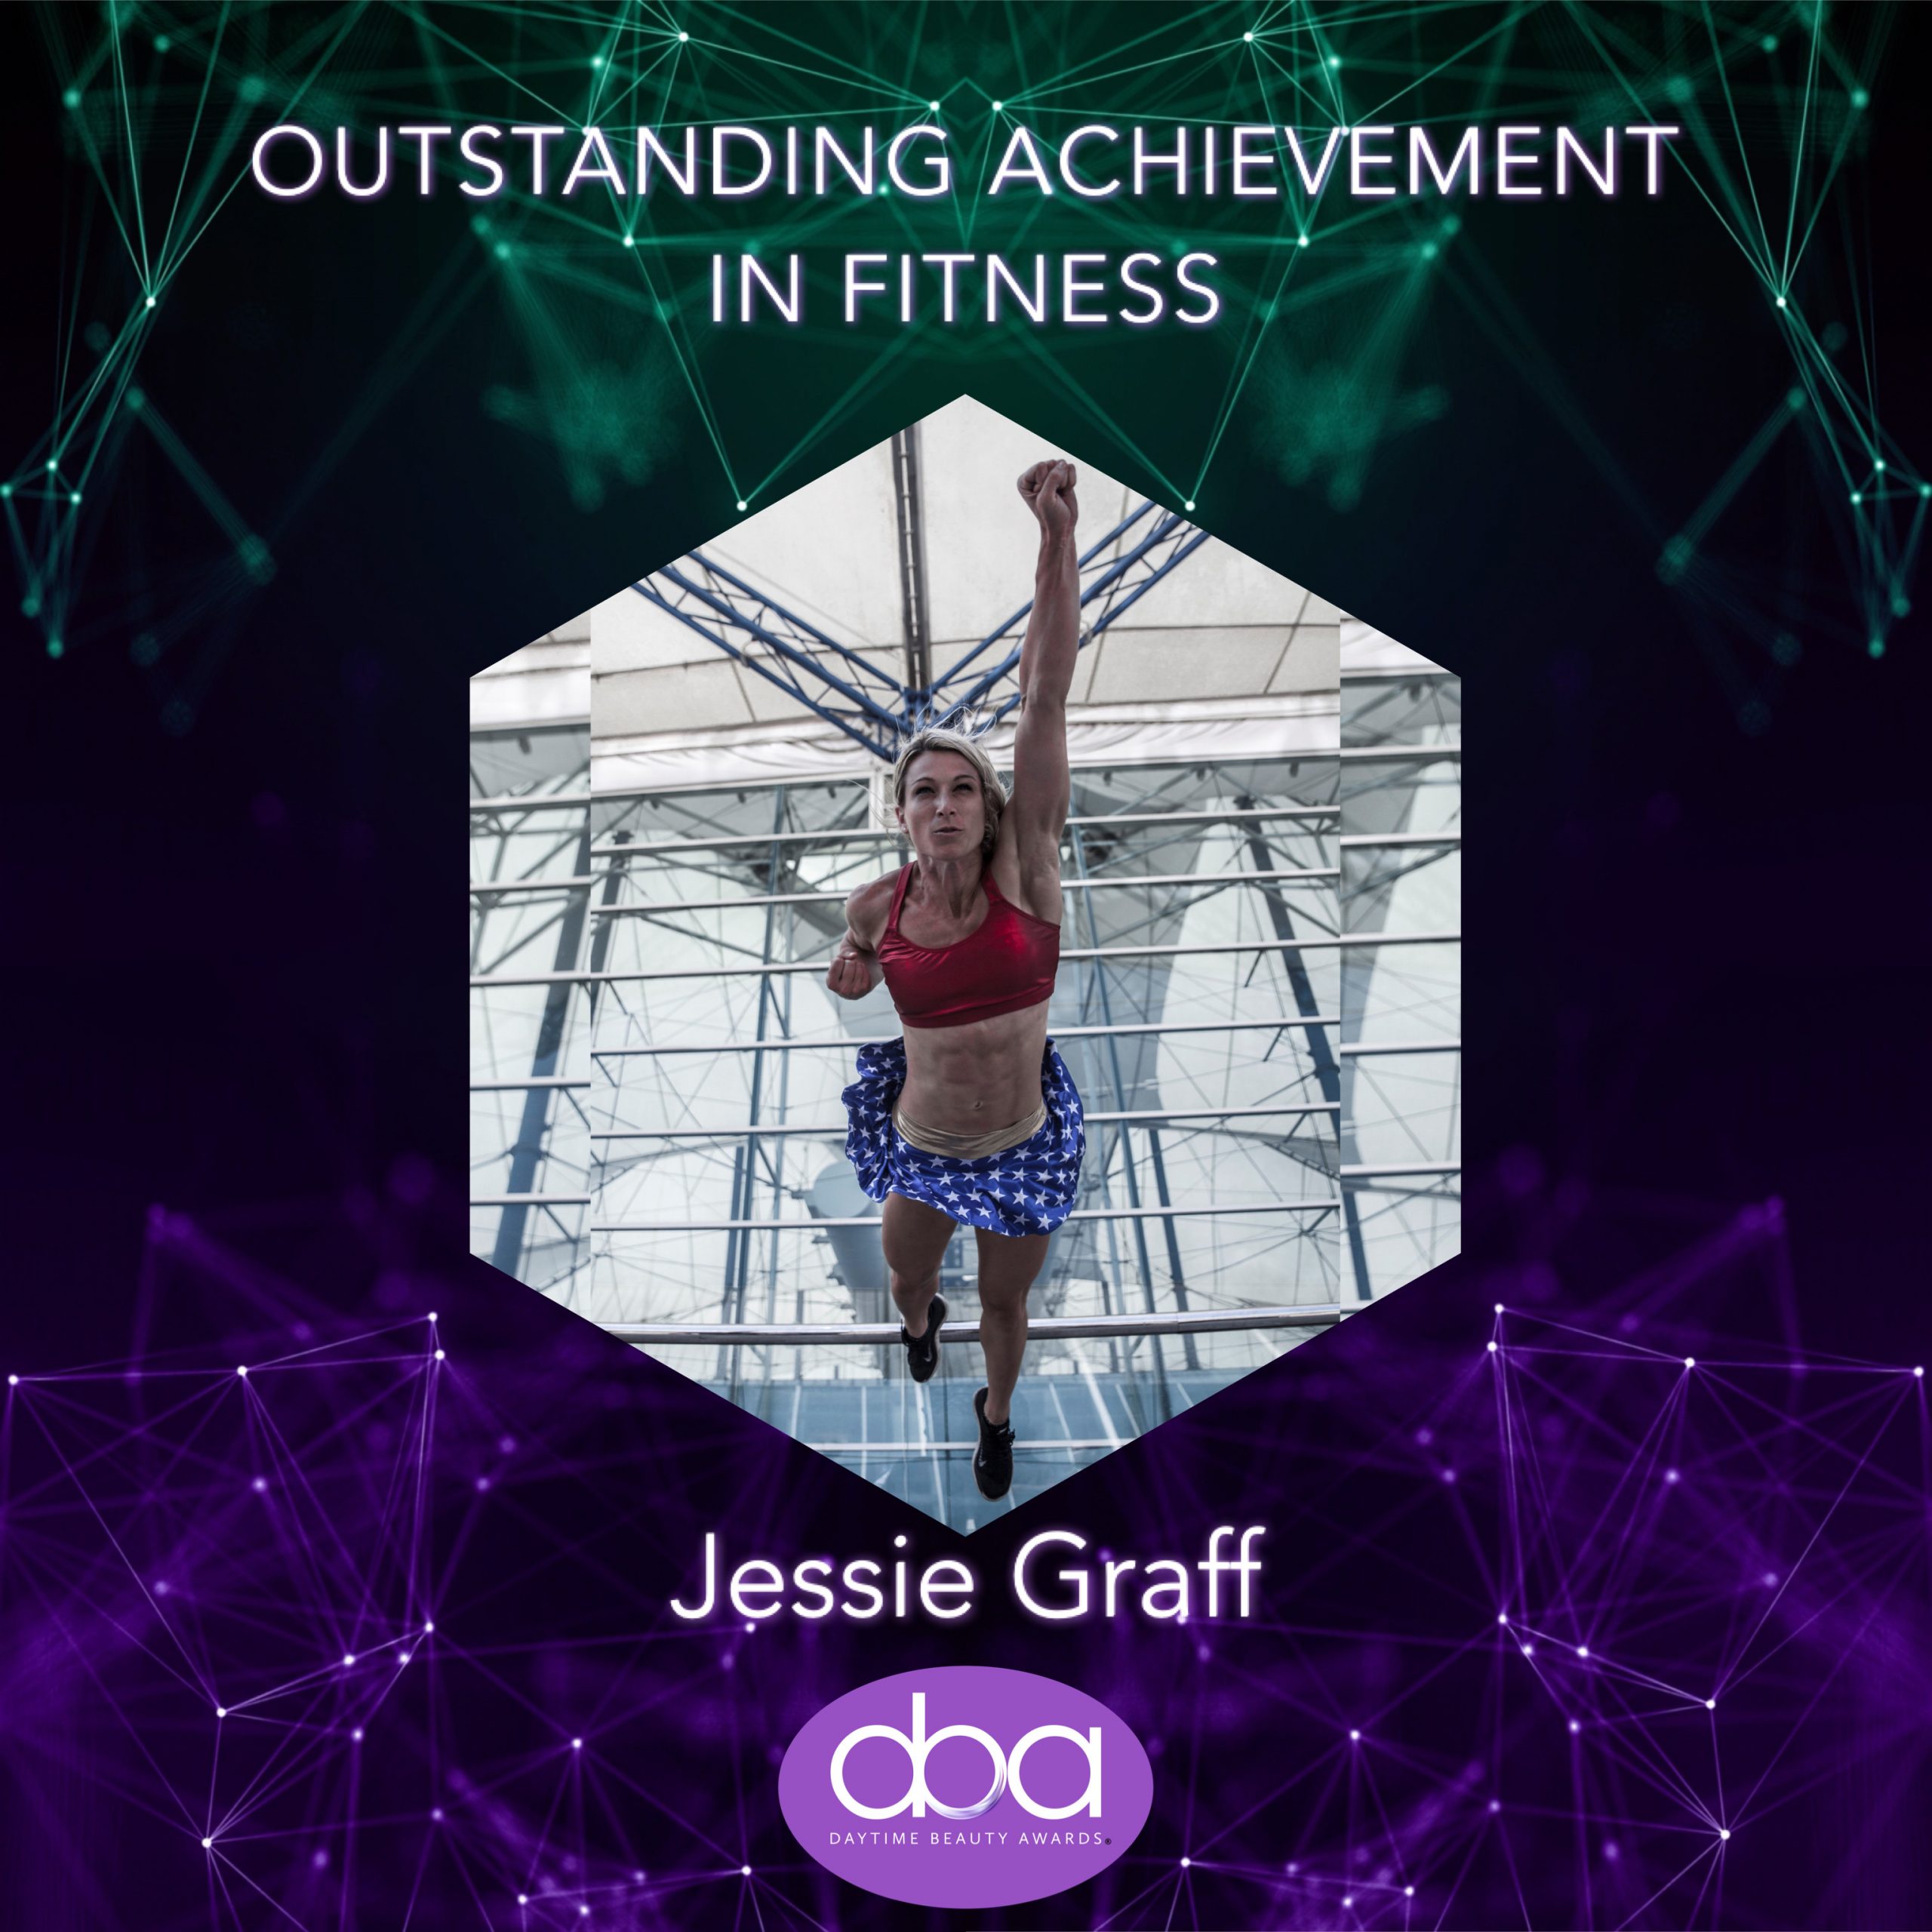 jessie graff daytime beauty awards fitness winners awards stunts